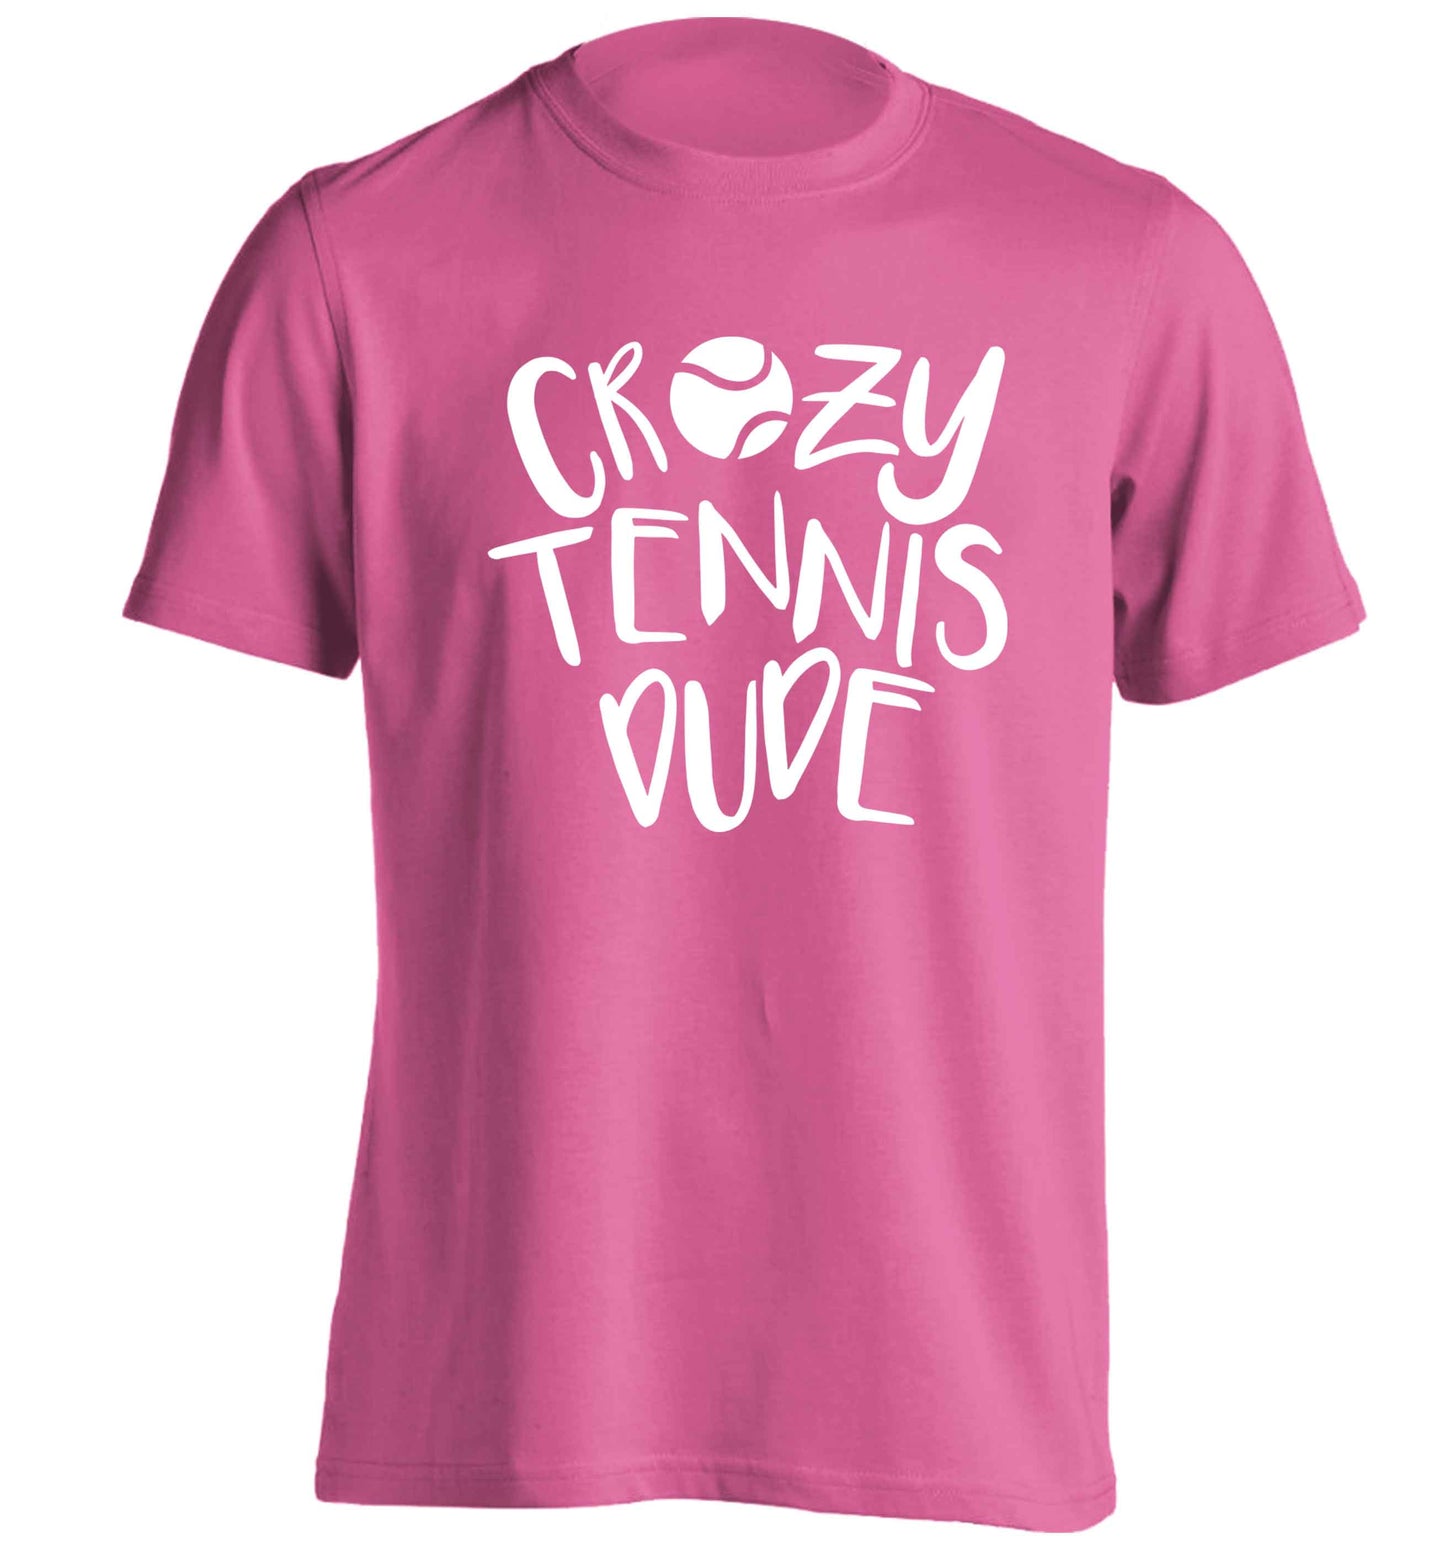 Crazy tennis dude adults unisex pink Tshirt 2XL